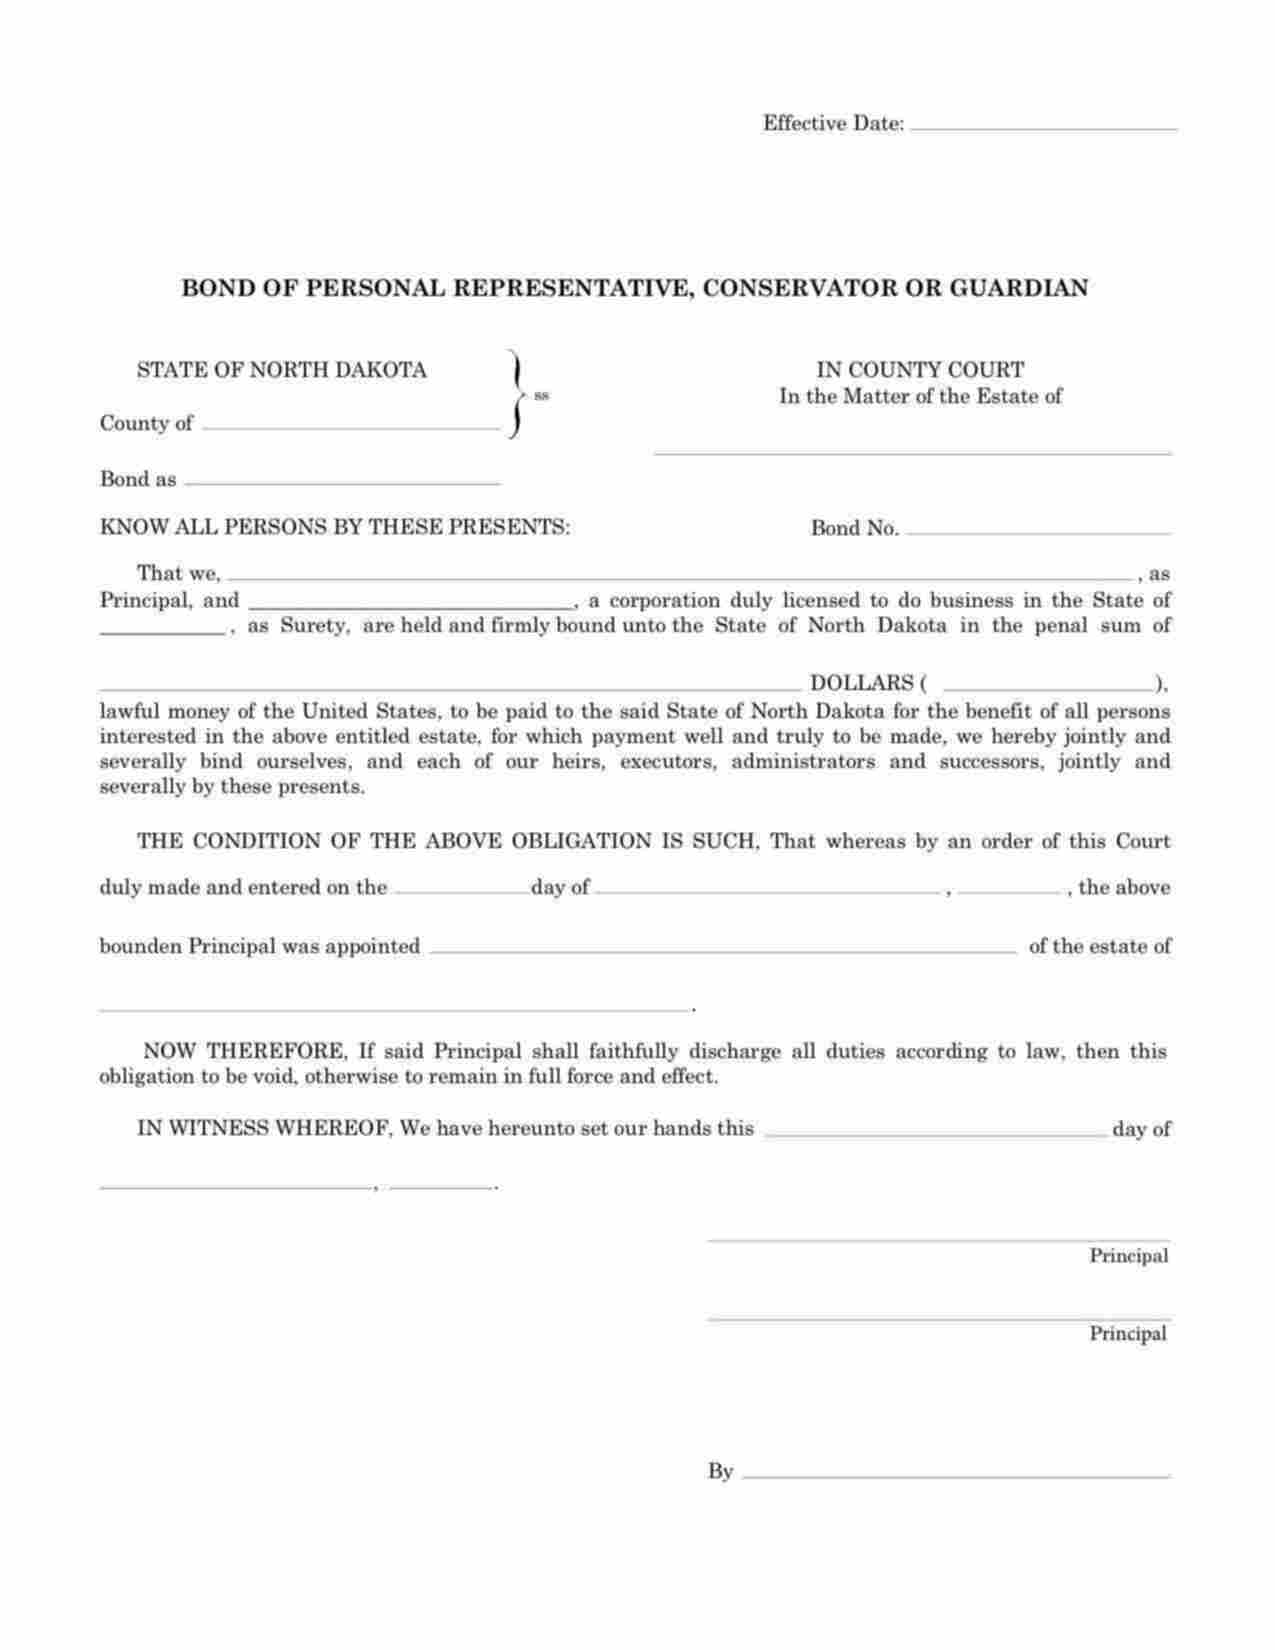 North Dakota Probate Administrator, Executor, Conservator, or Guardian Bond Form